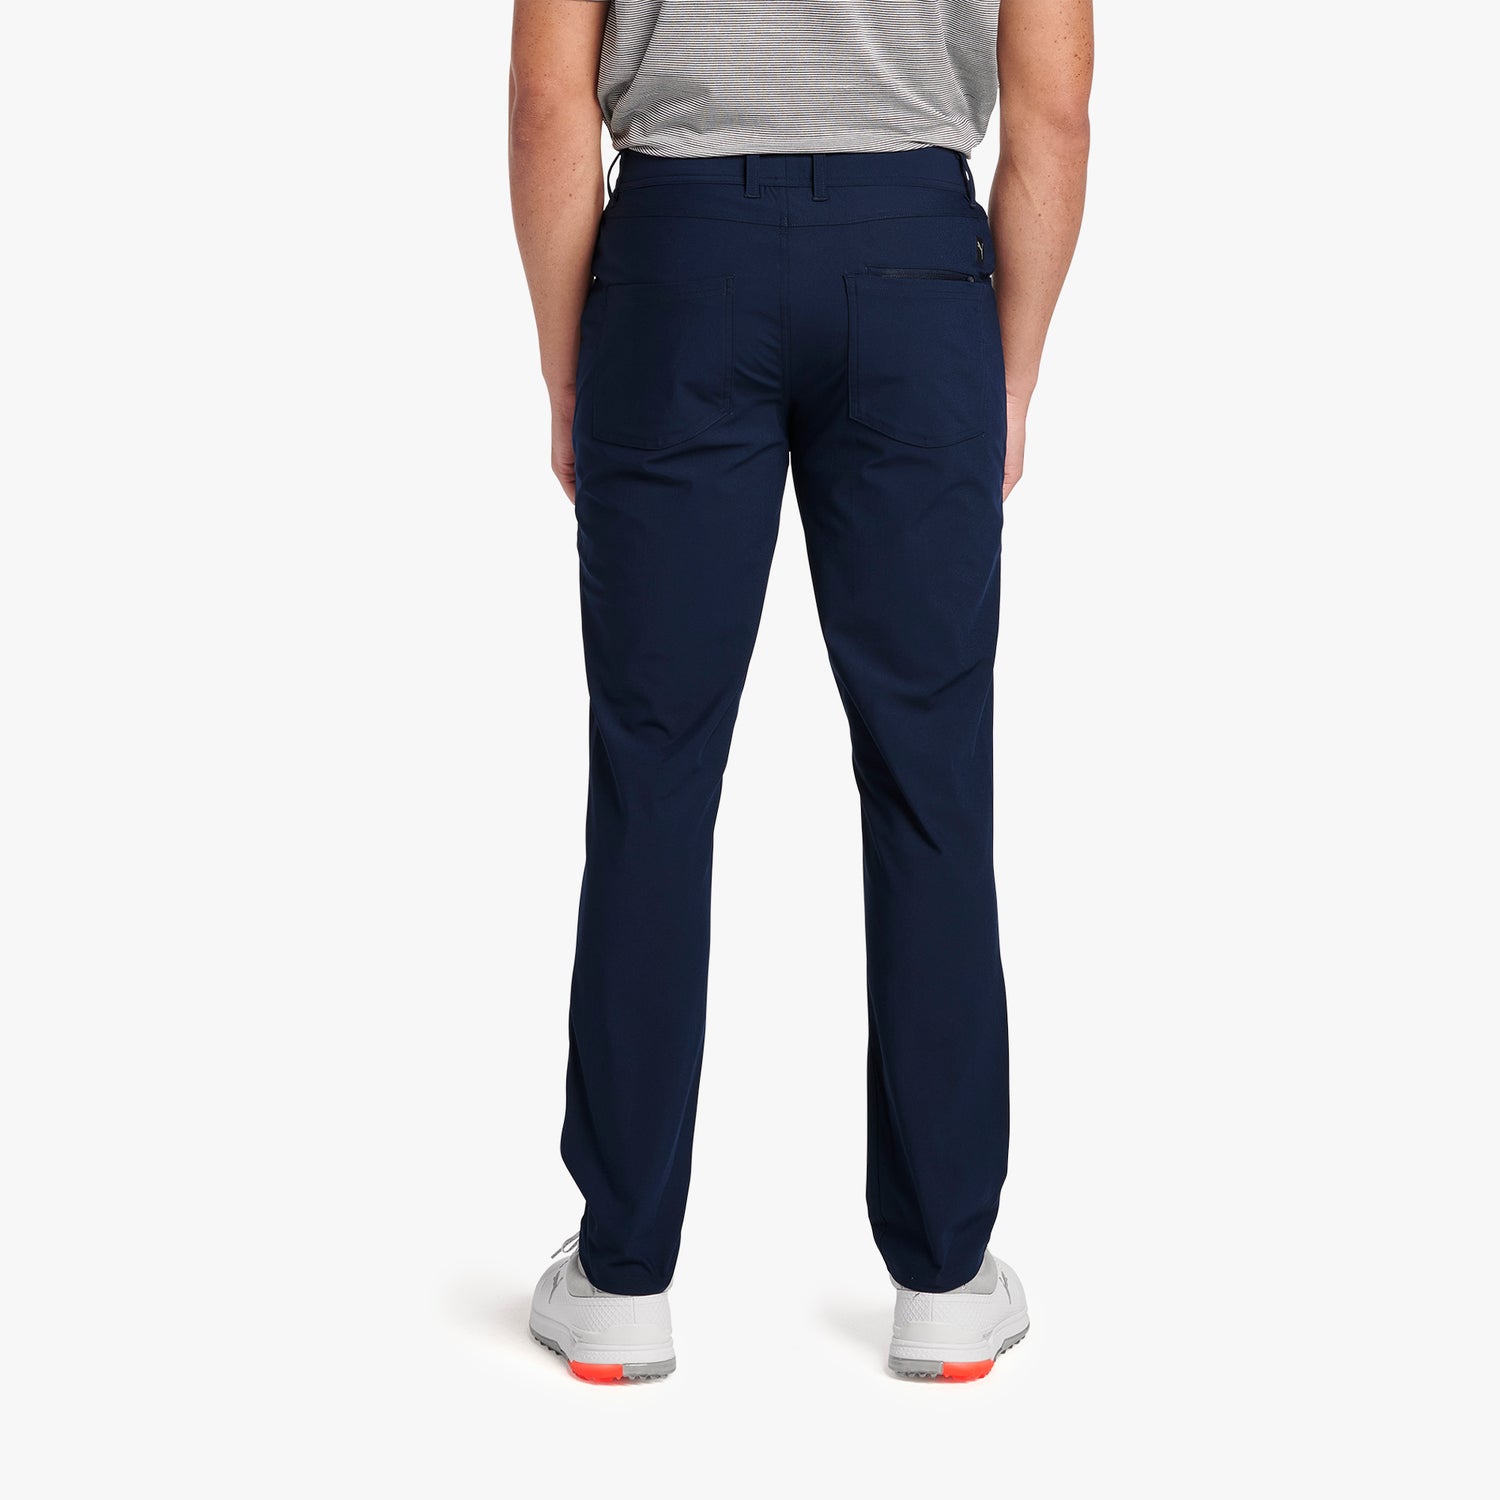 101 Men's Golf Pants